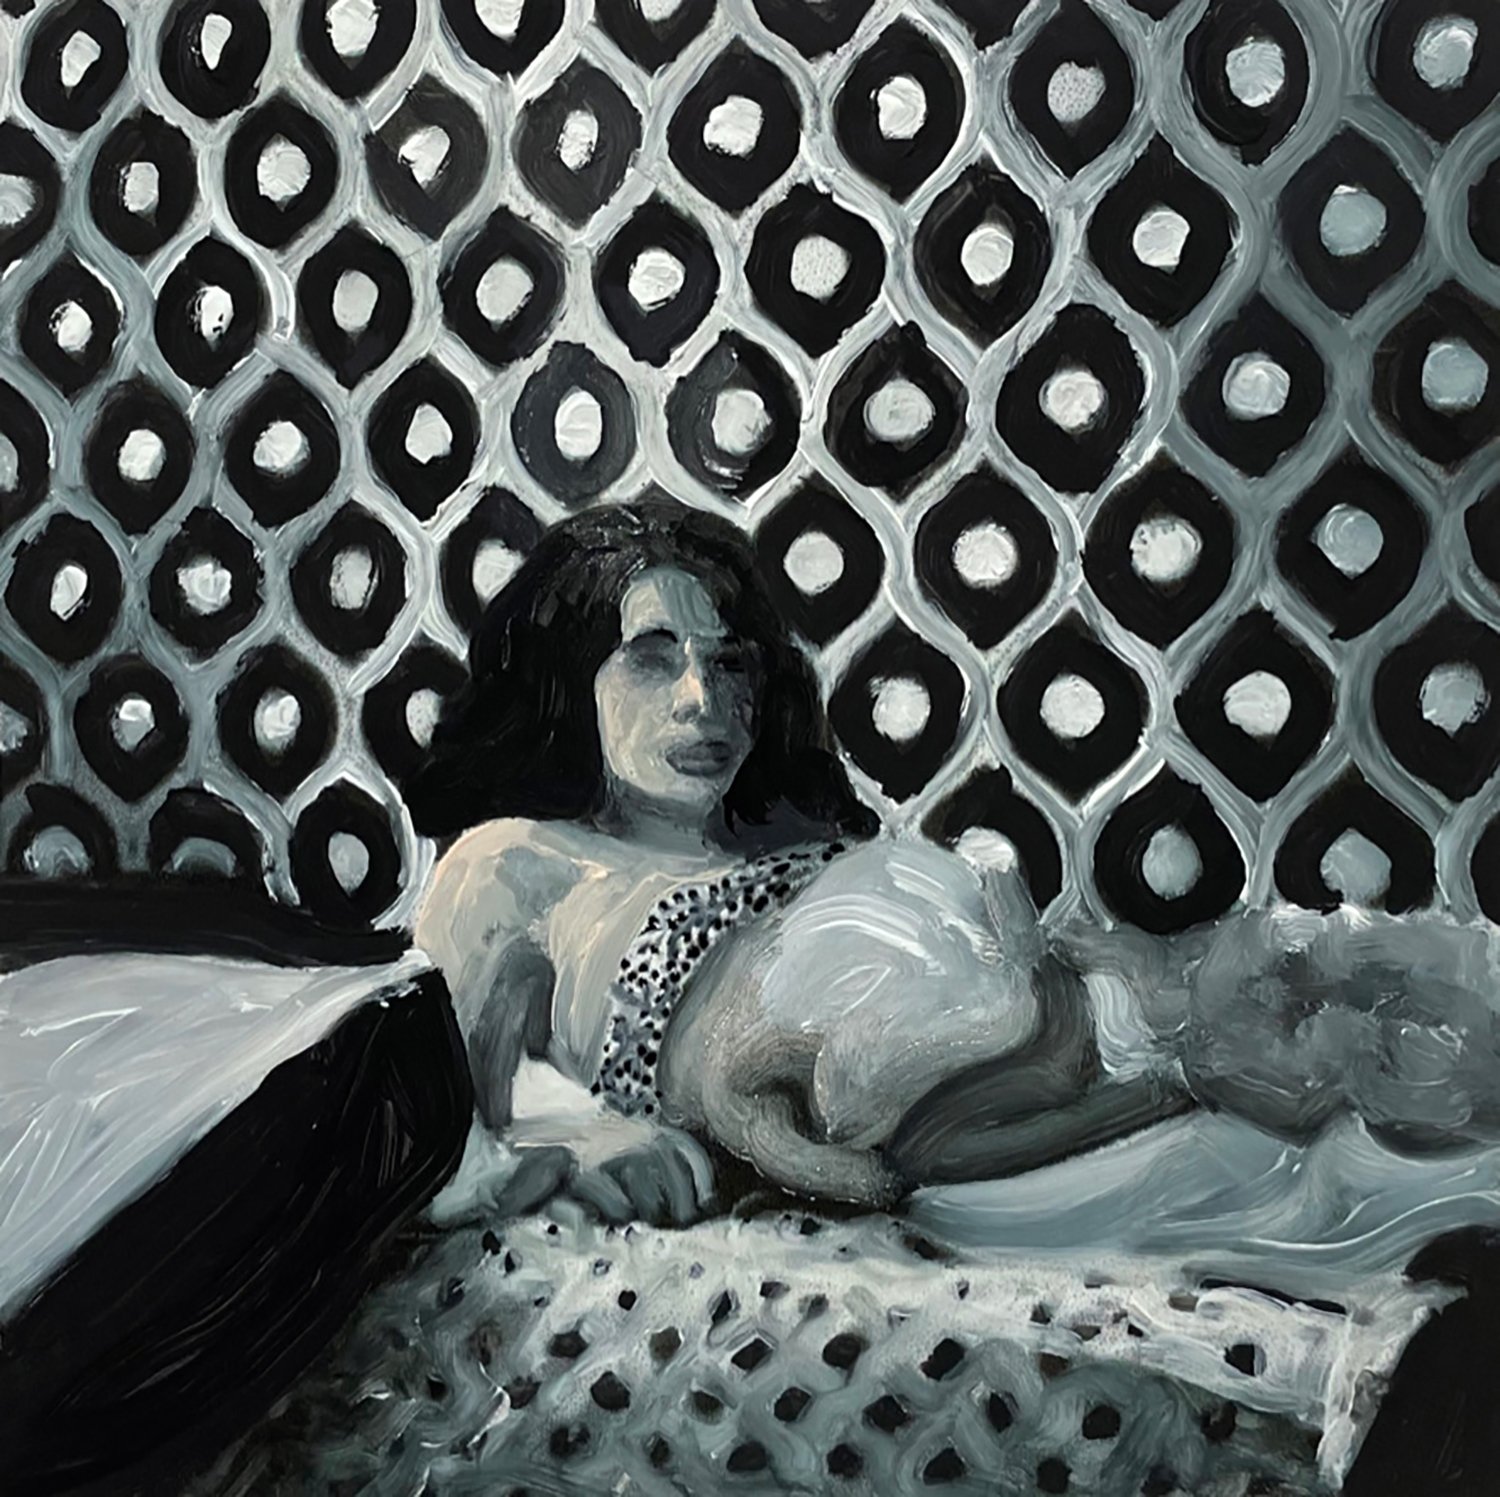 Fran Lebowitz in bed